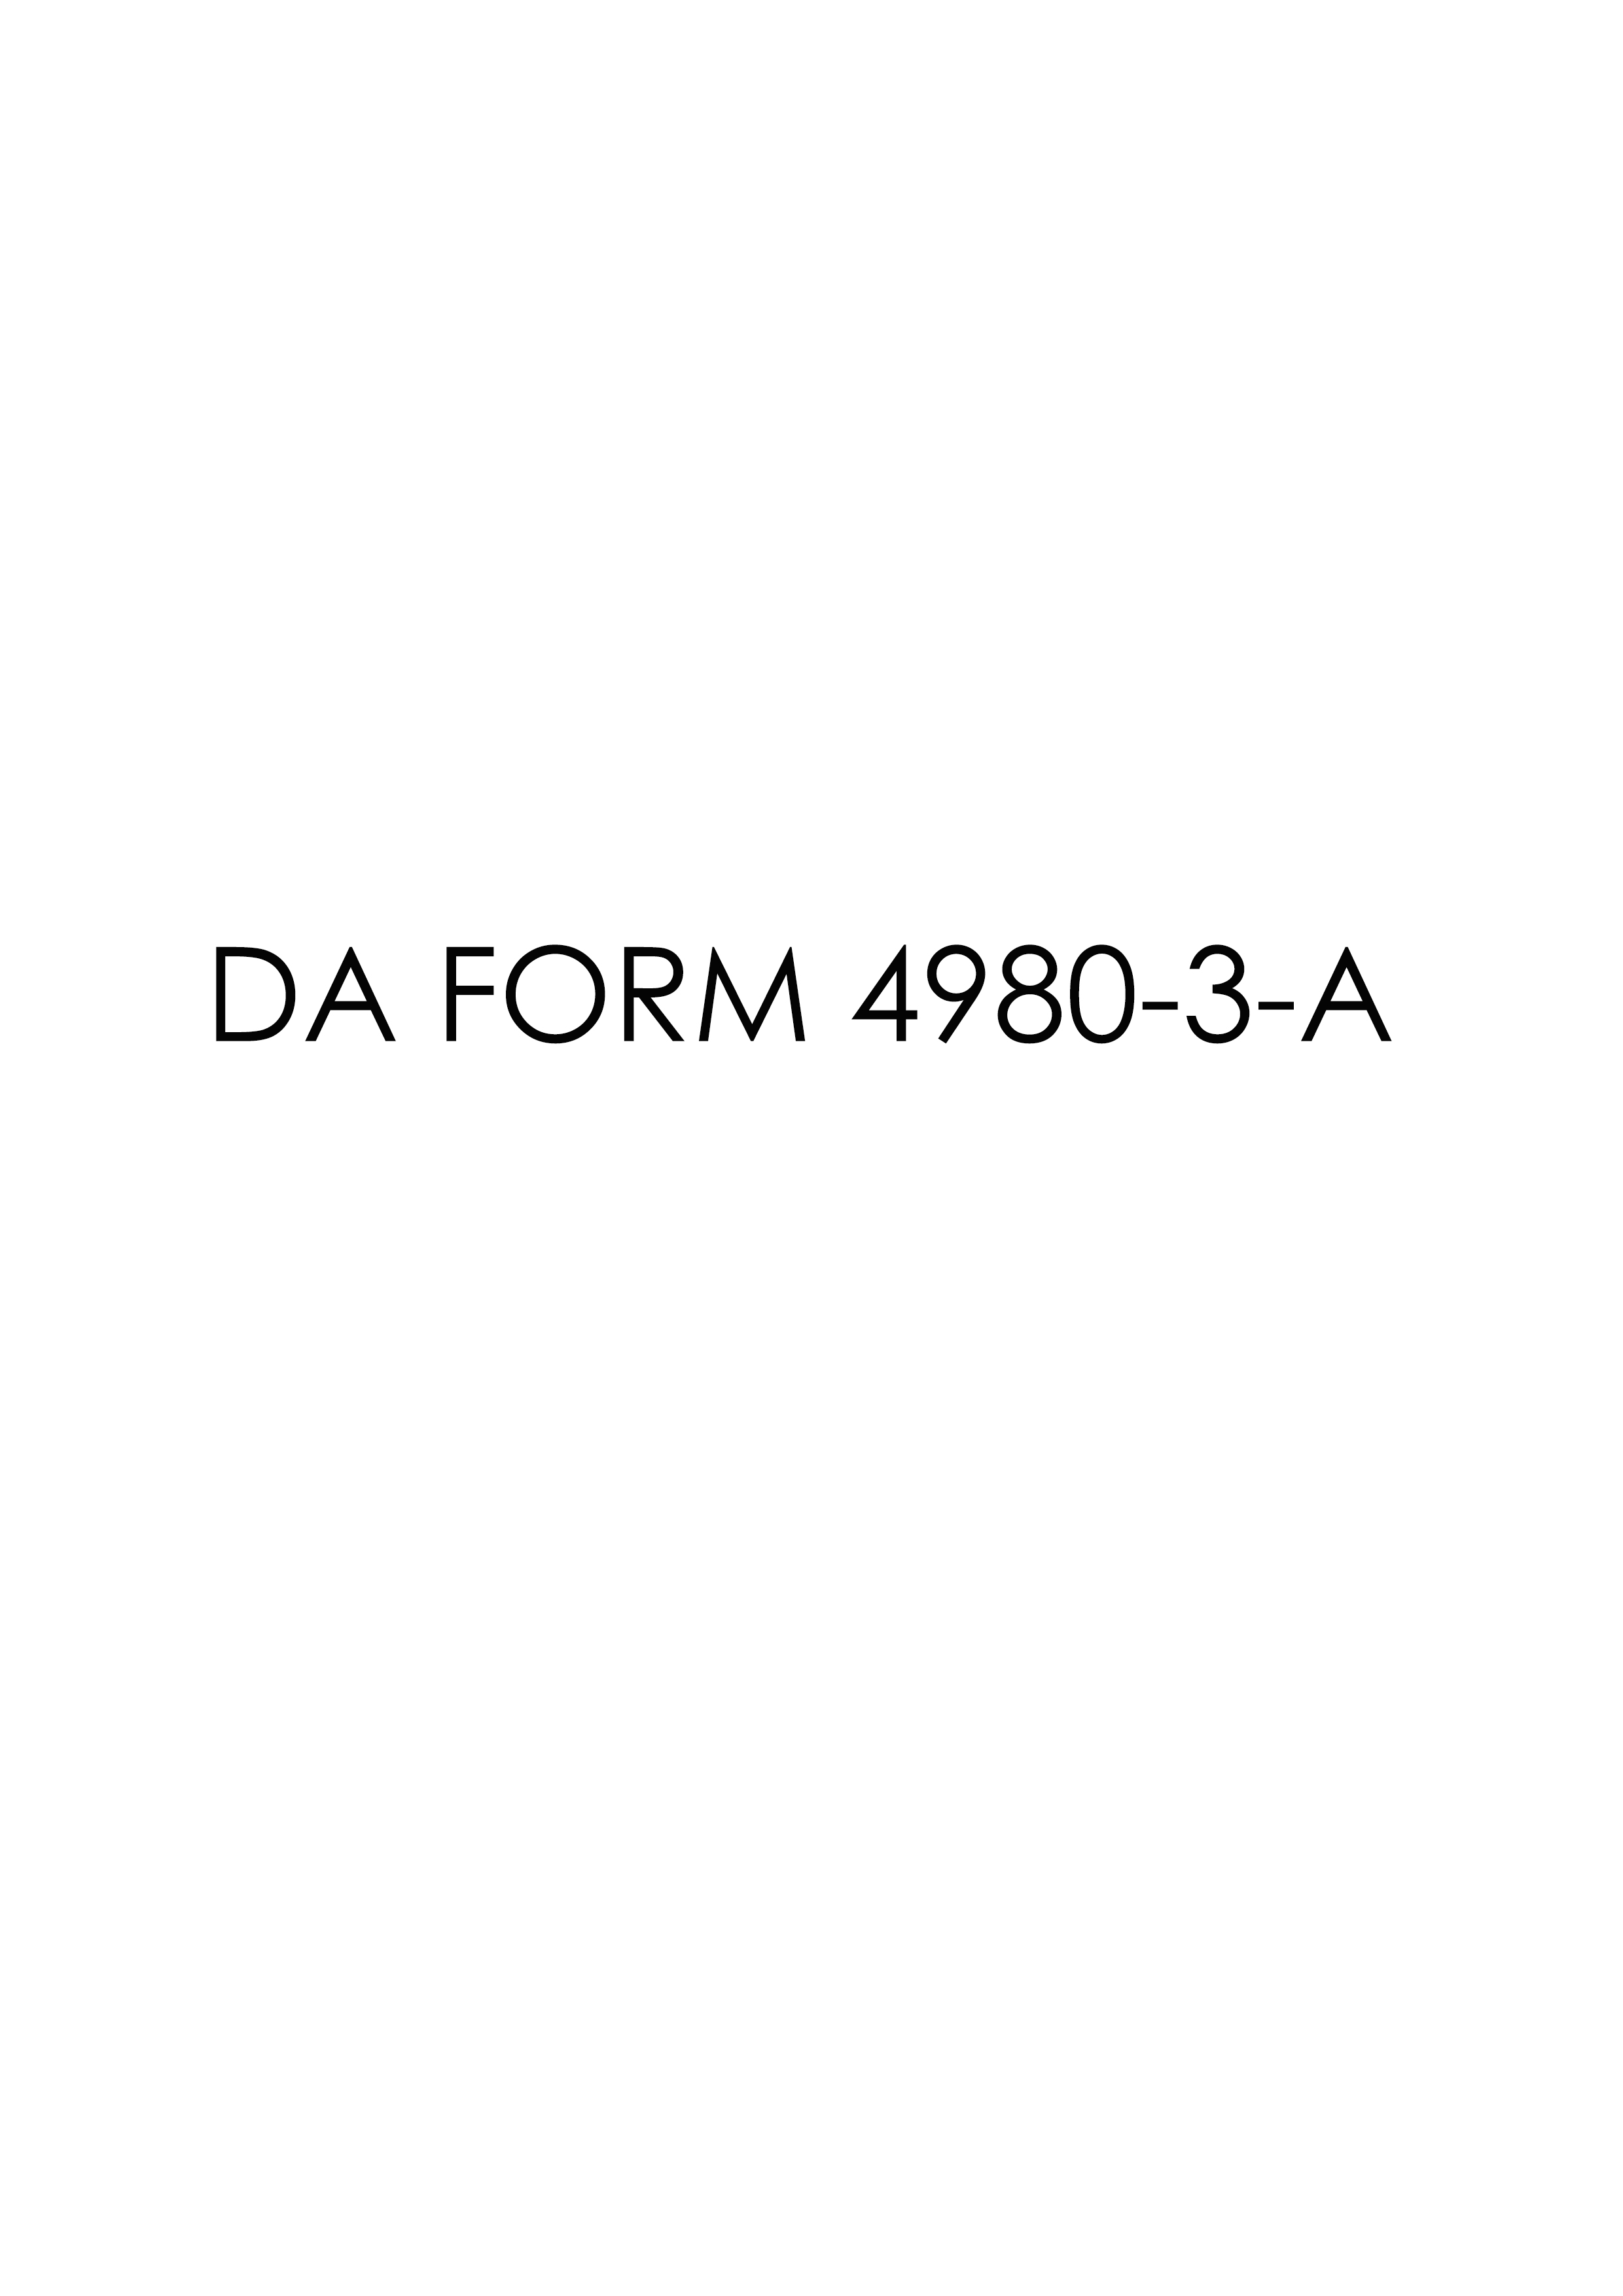 da Form 4980-3-A fillable